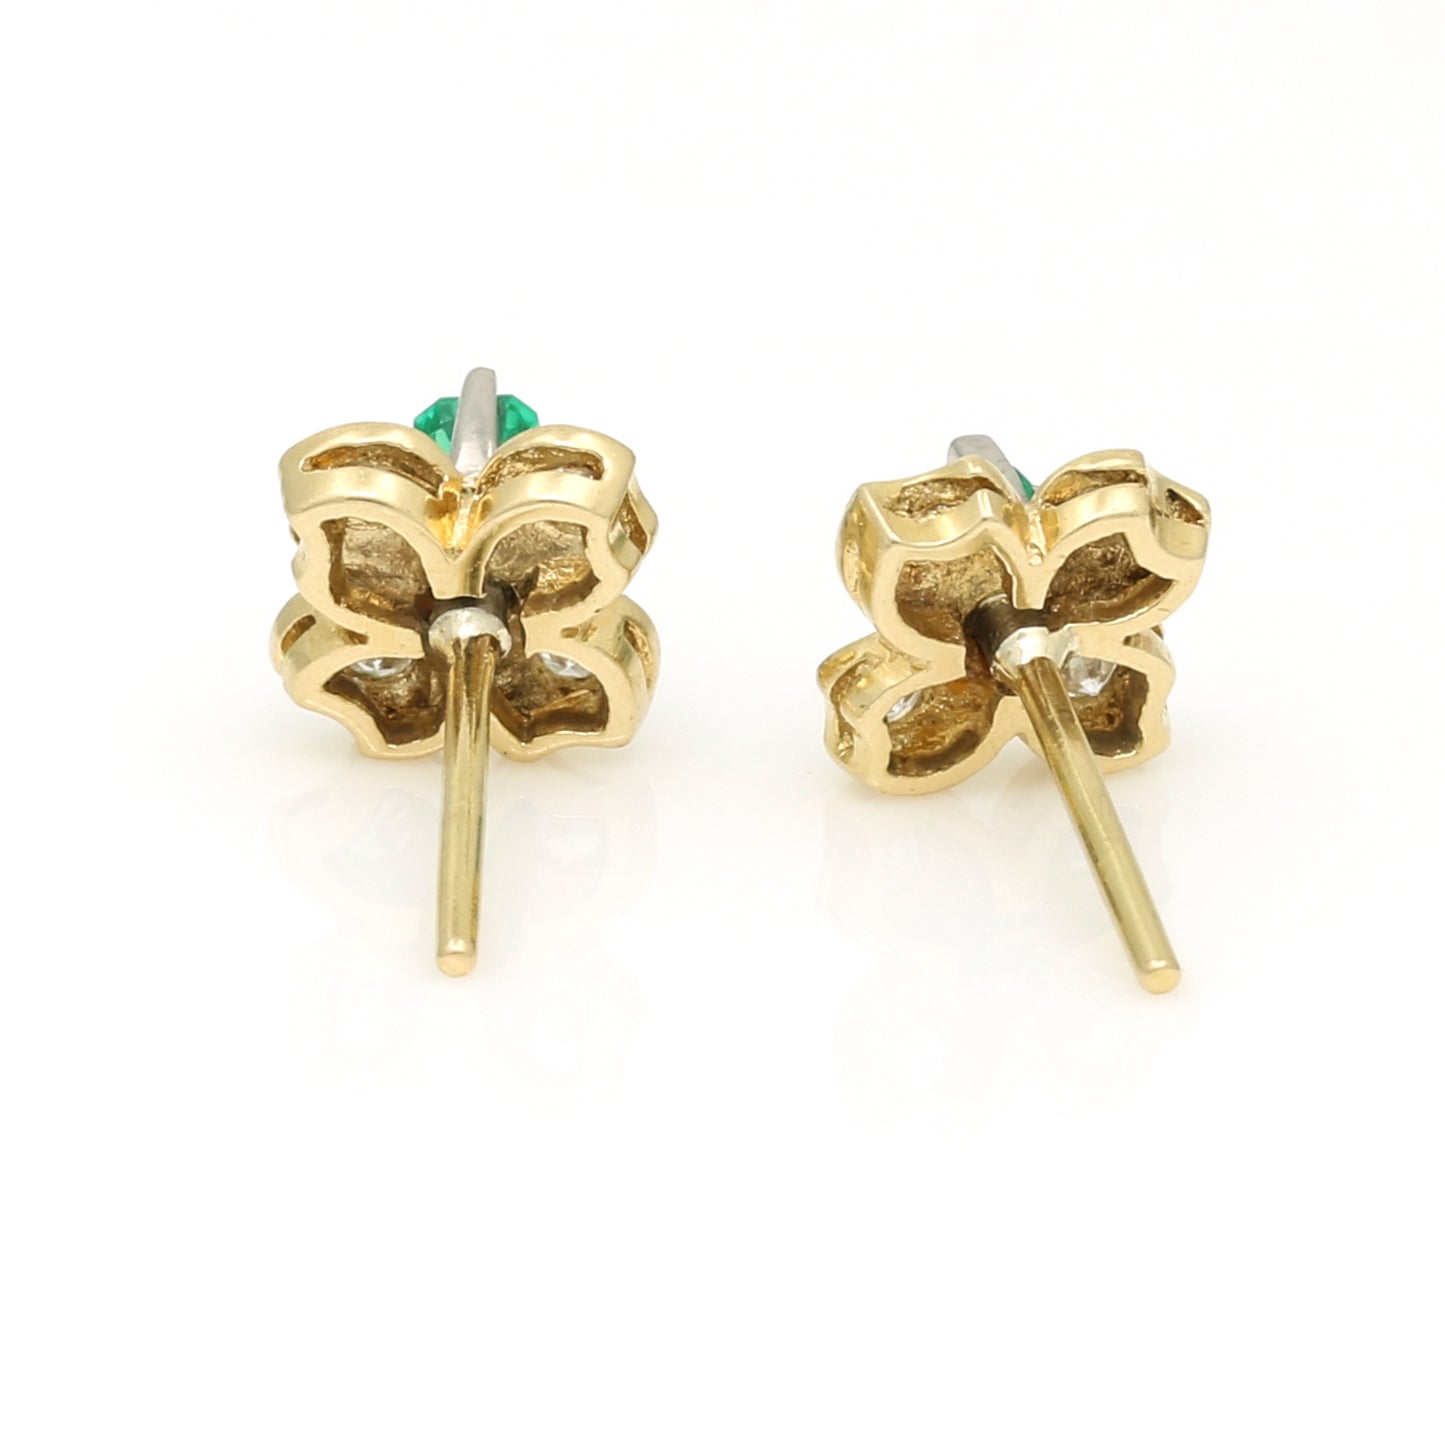 Vintage Emerald Diamond Four Petal Flower Stud Earrings - 18k Yellow Gold